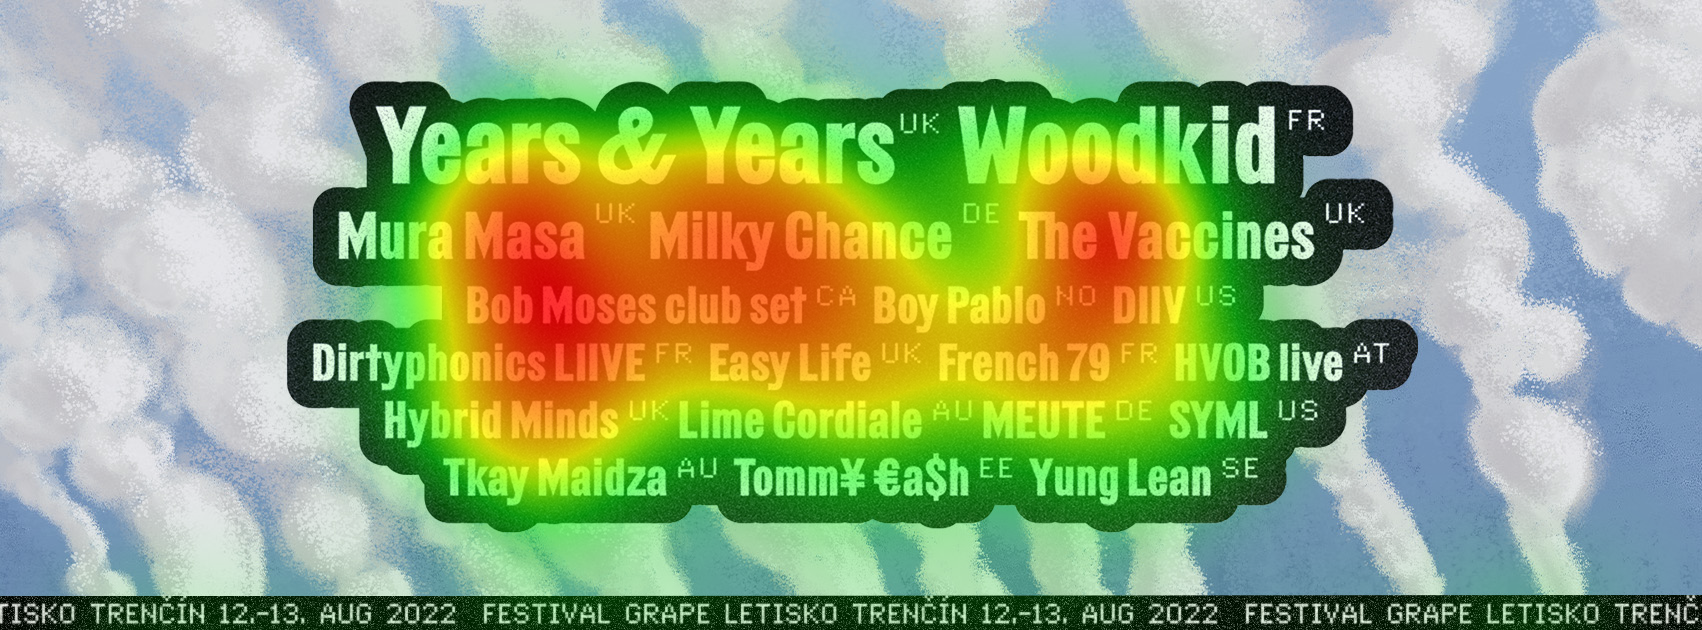 plagát festivalu Grape 2022